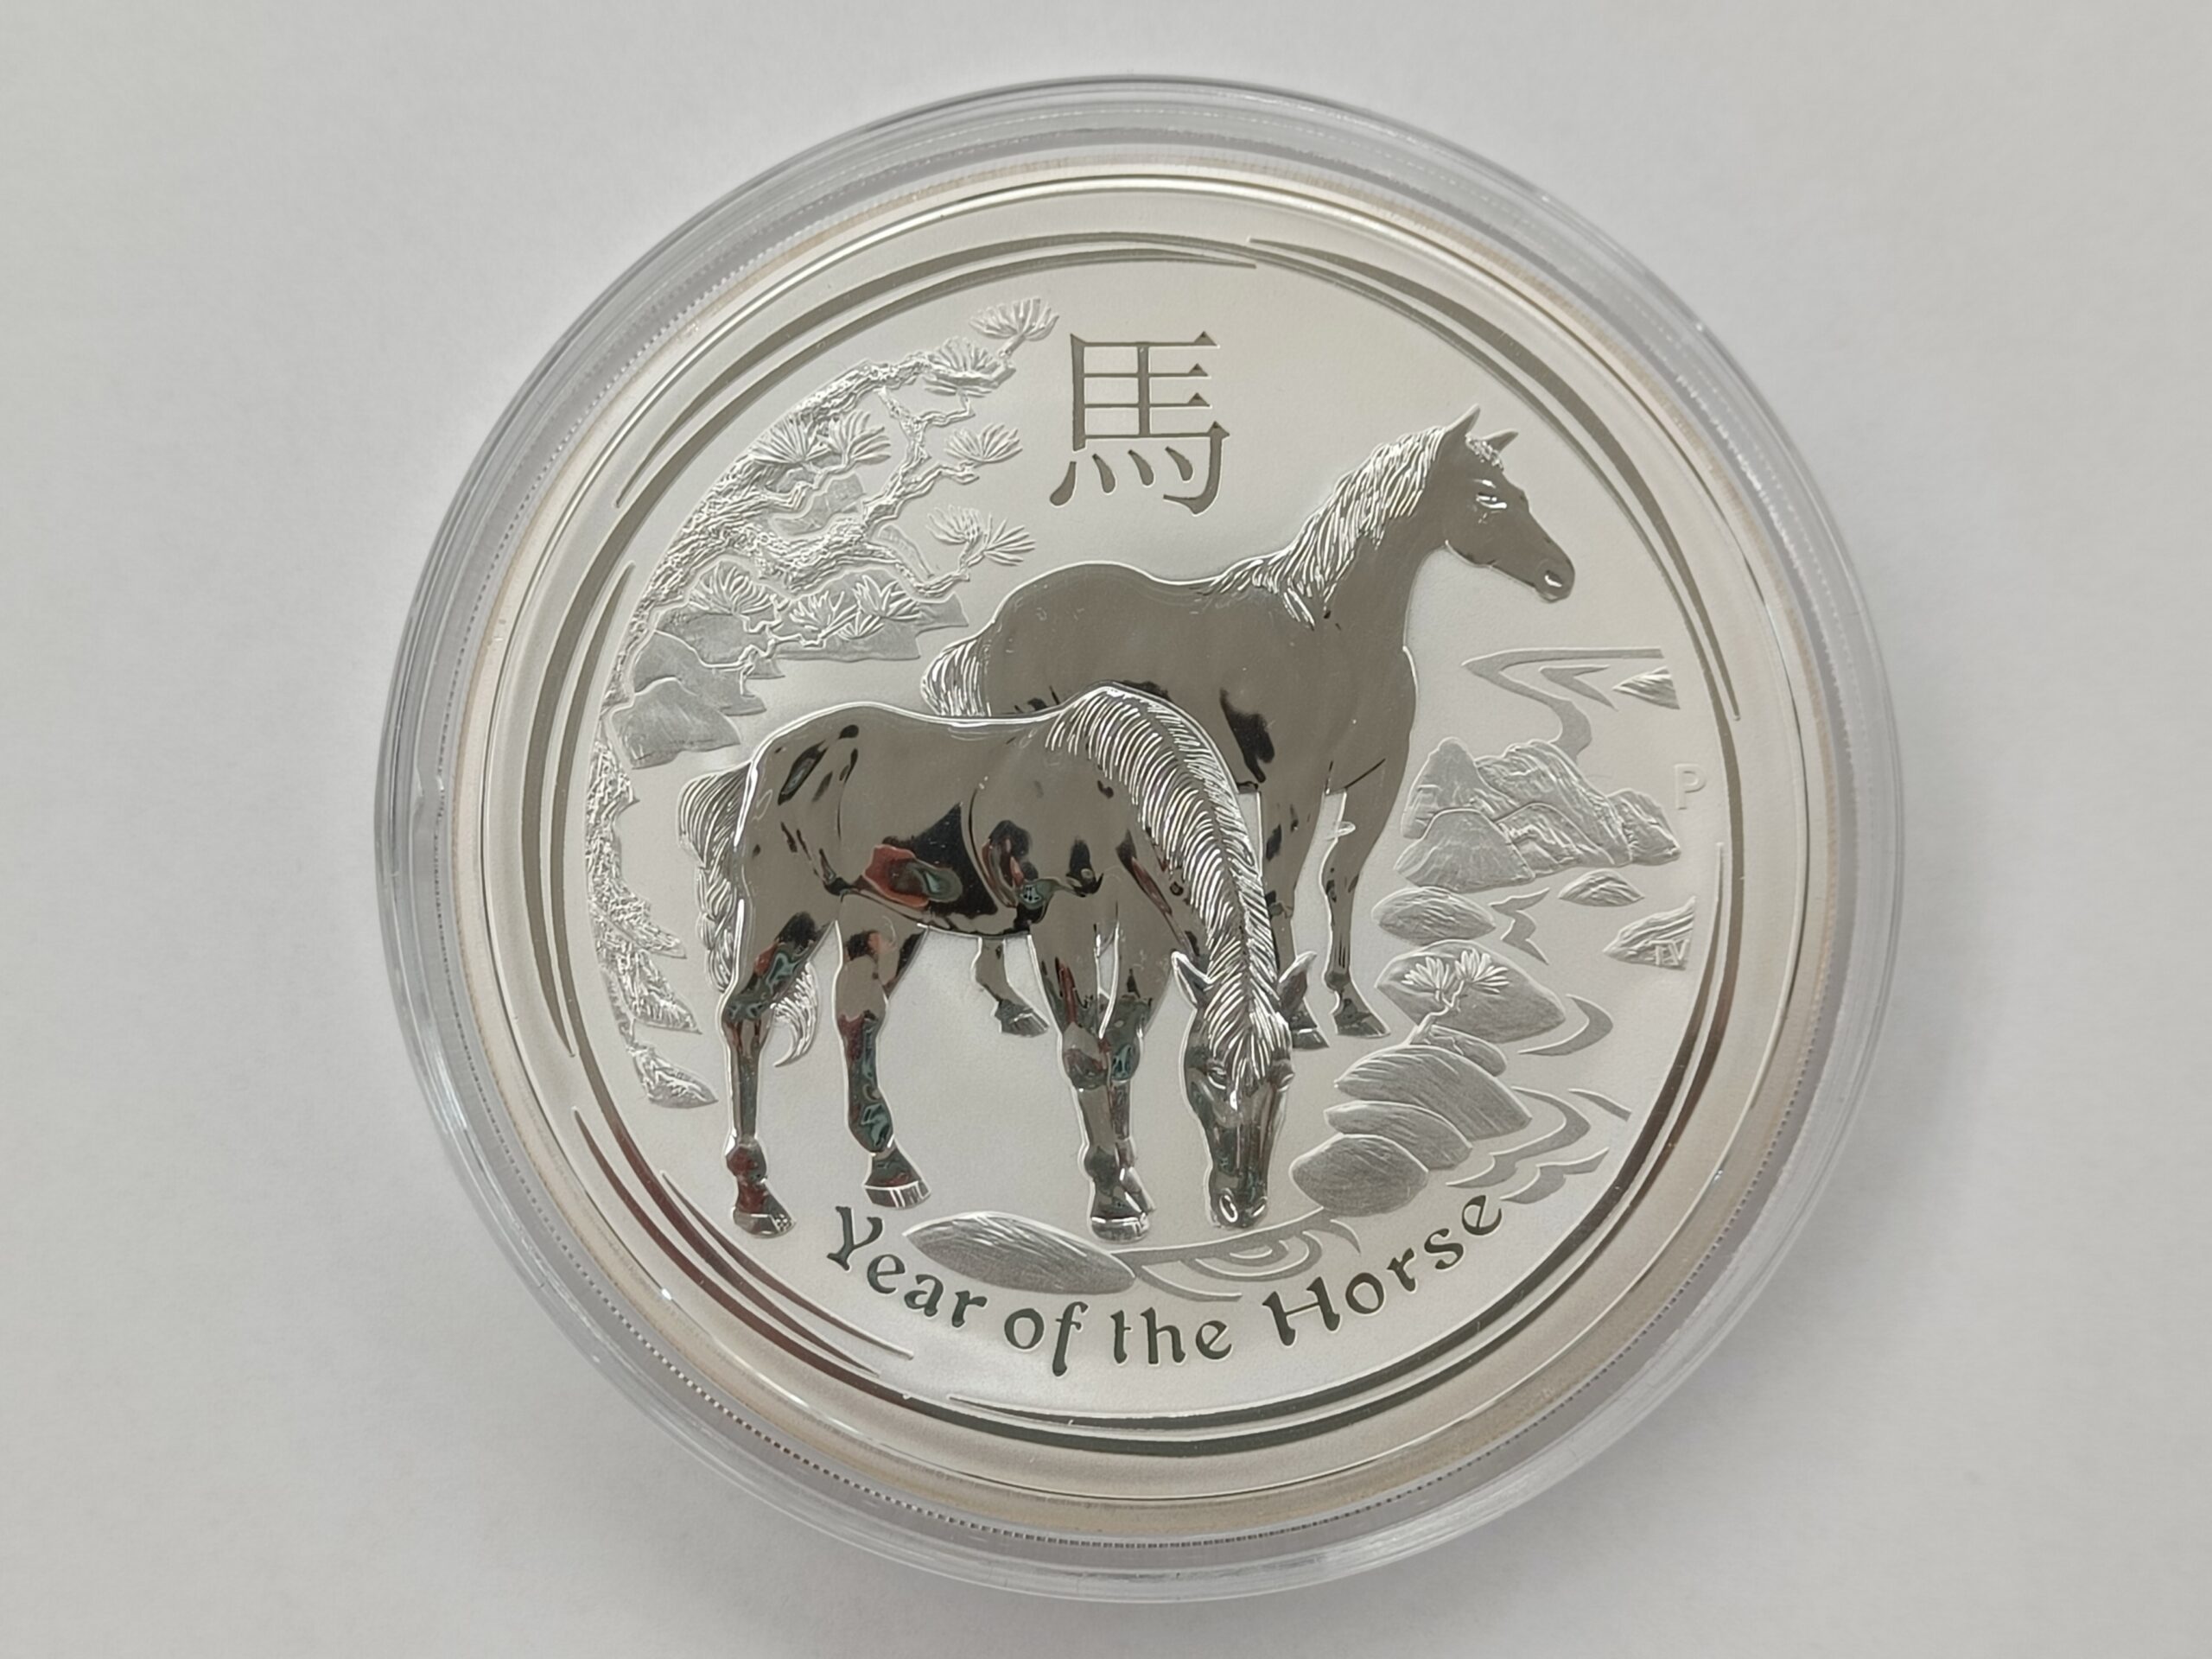 Kilo zilveren munt Lunar Year of the Horse